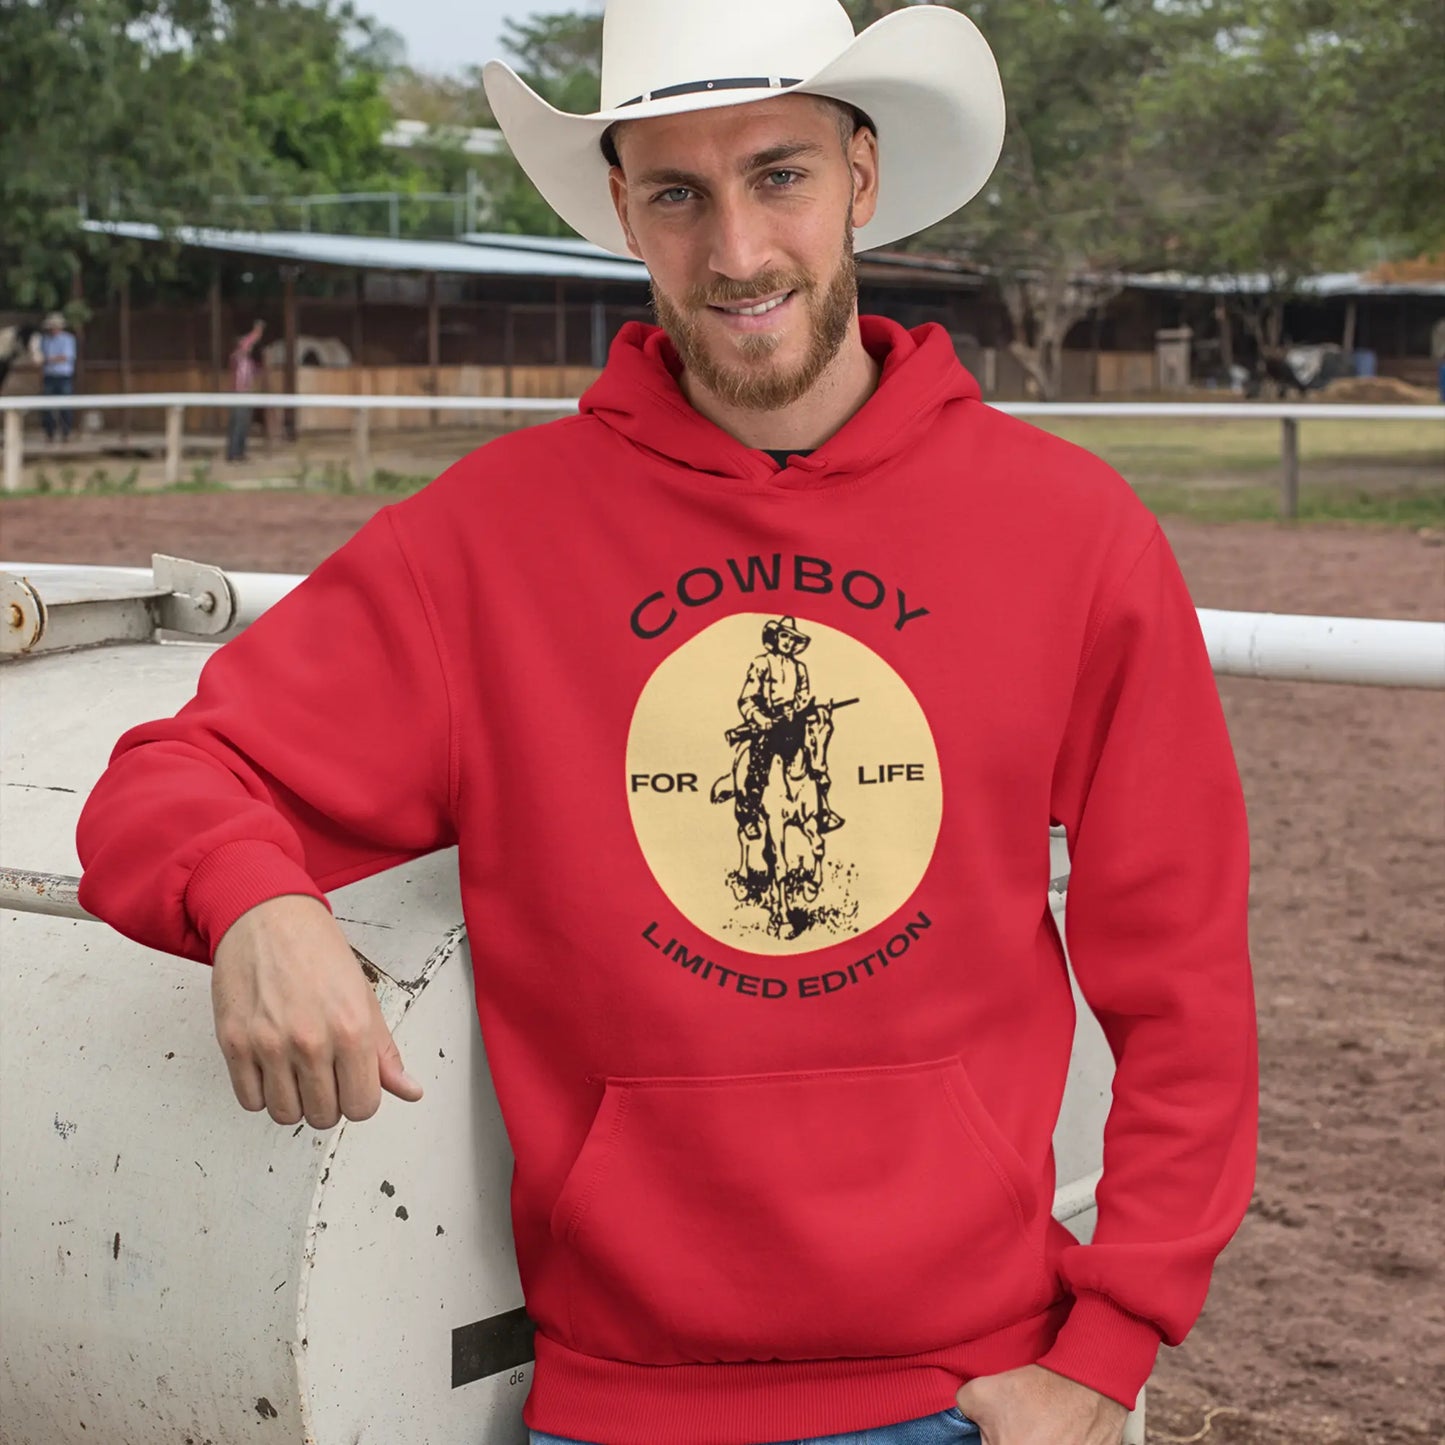 Cowboy Logo Graphic Hoodie - Retro  Western Sweatshirt